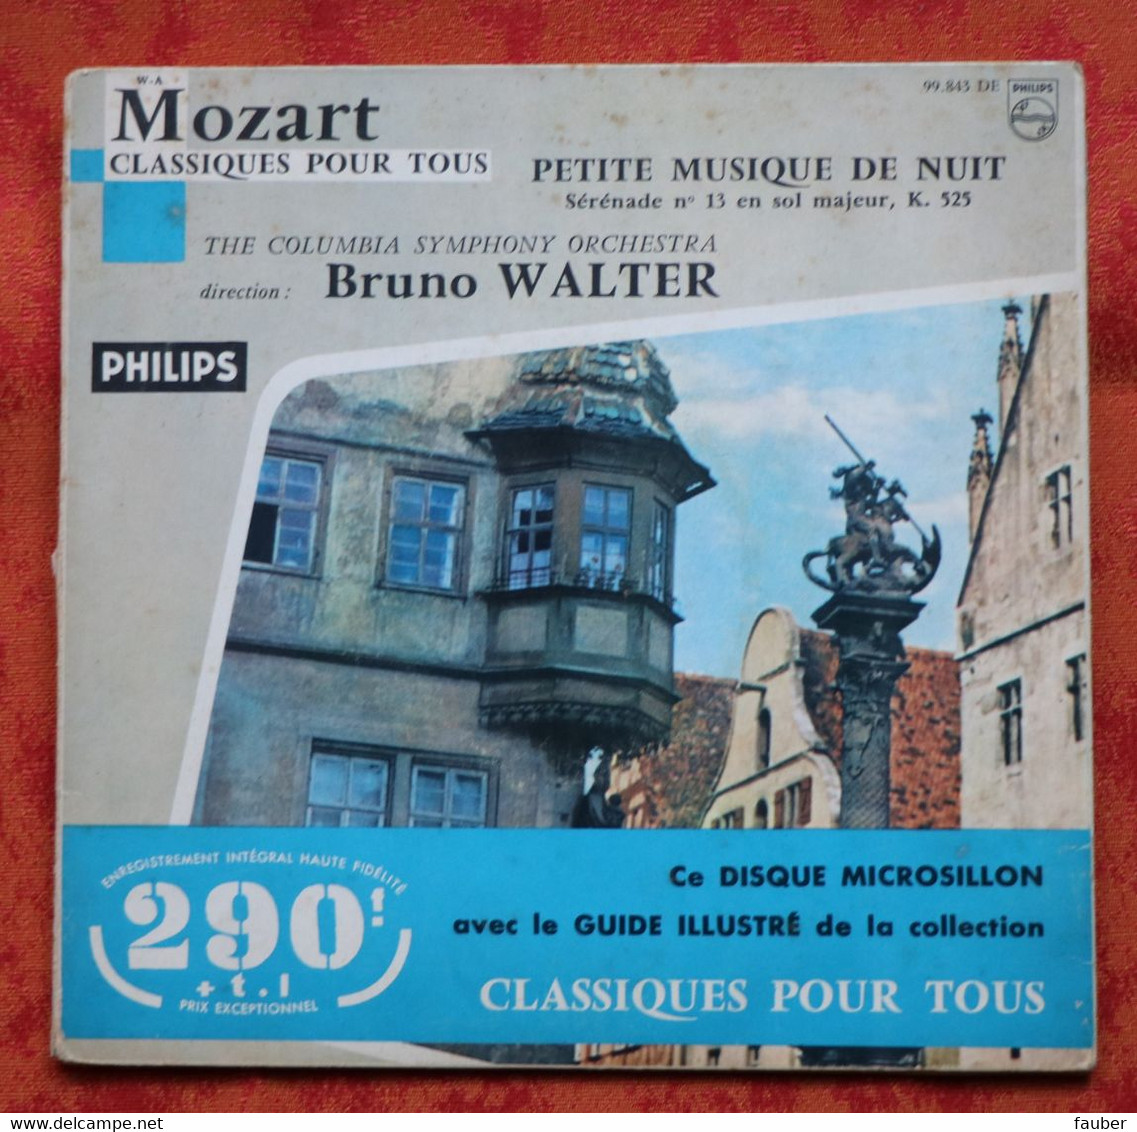 Mozart - Petite Musique De Nuit - Colombia Symphony Orchestra - Bruno Walter - Philips - Classical